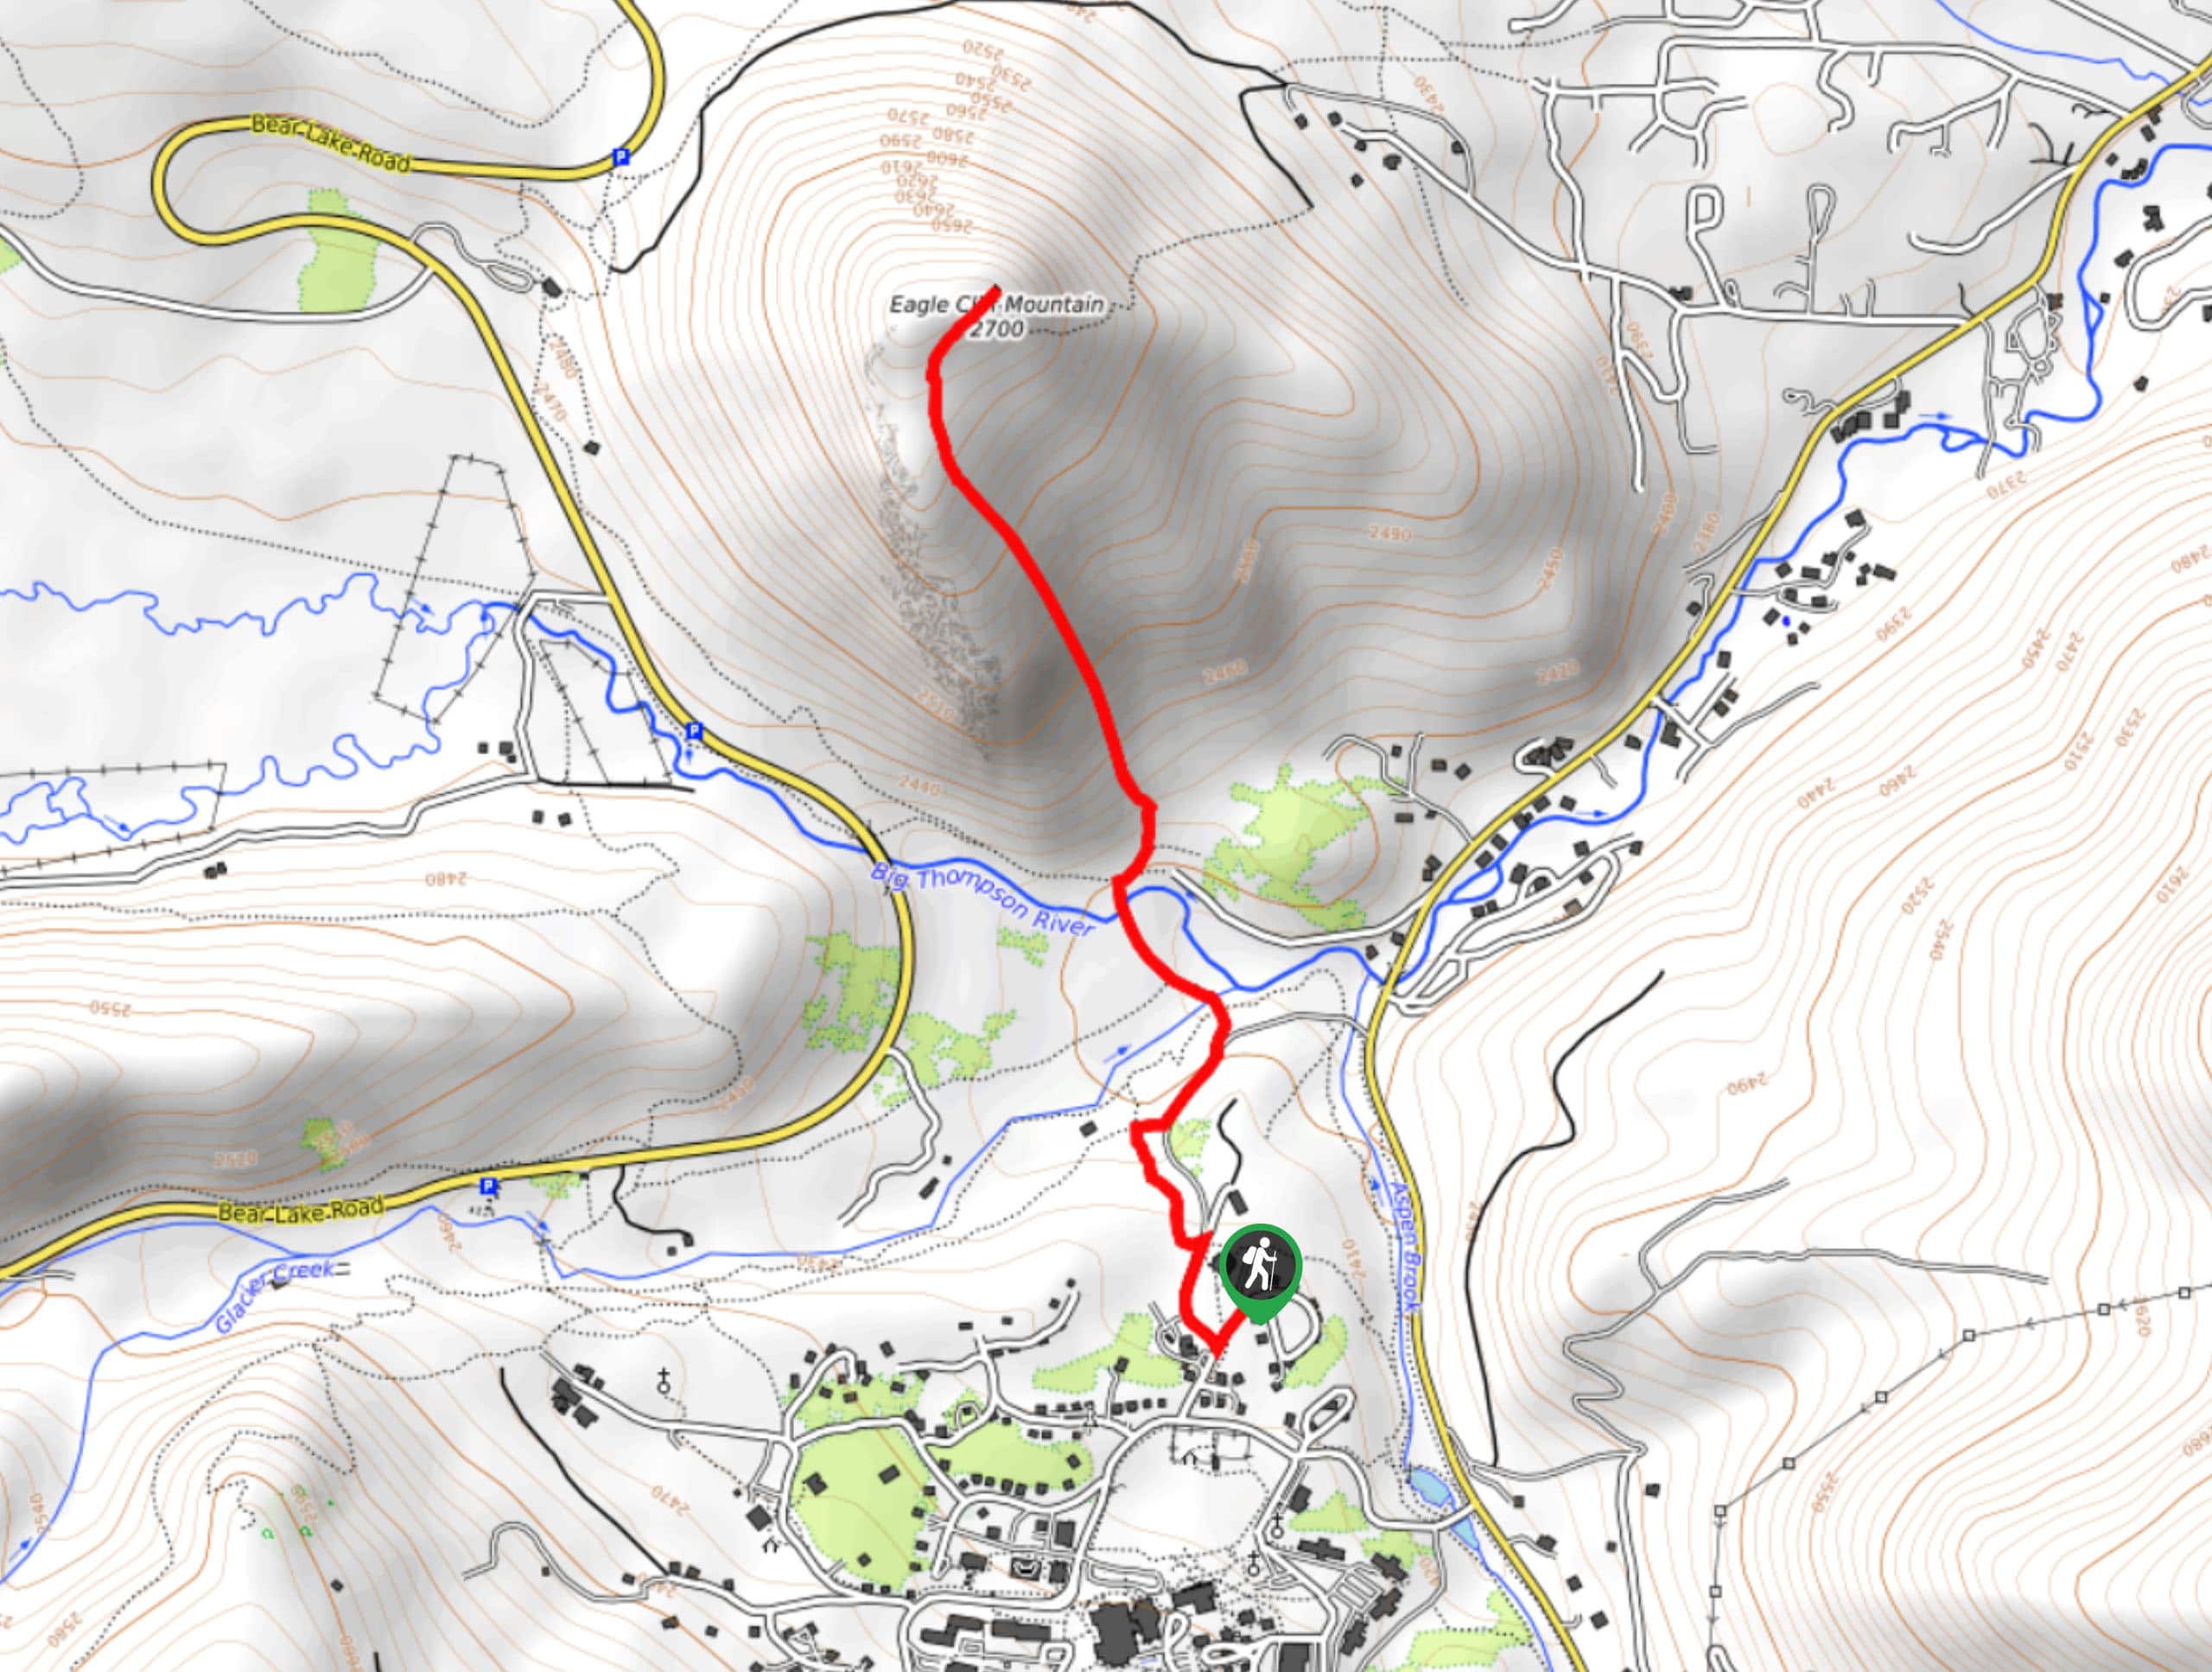 Eagle Cliff Mountain Hike Map